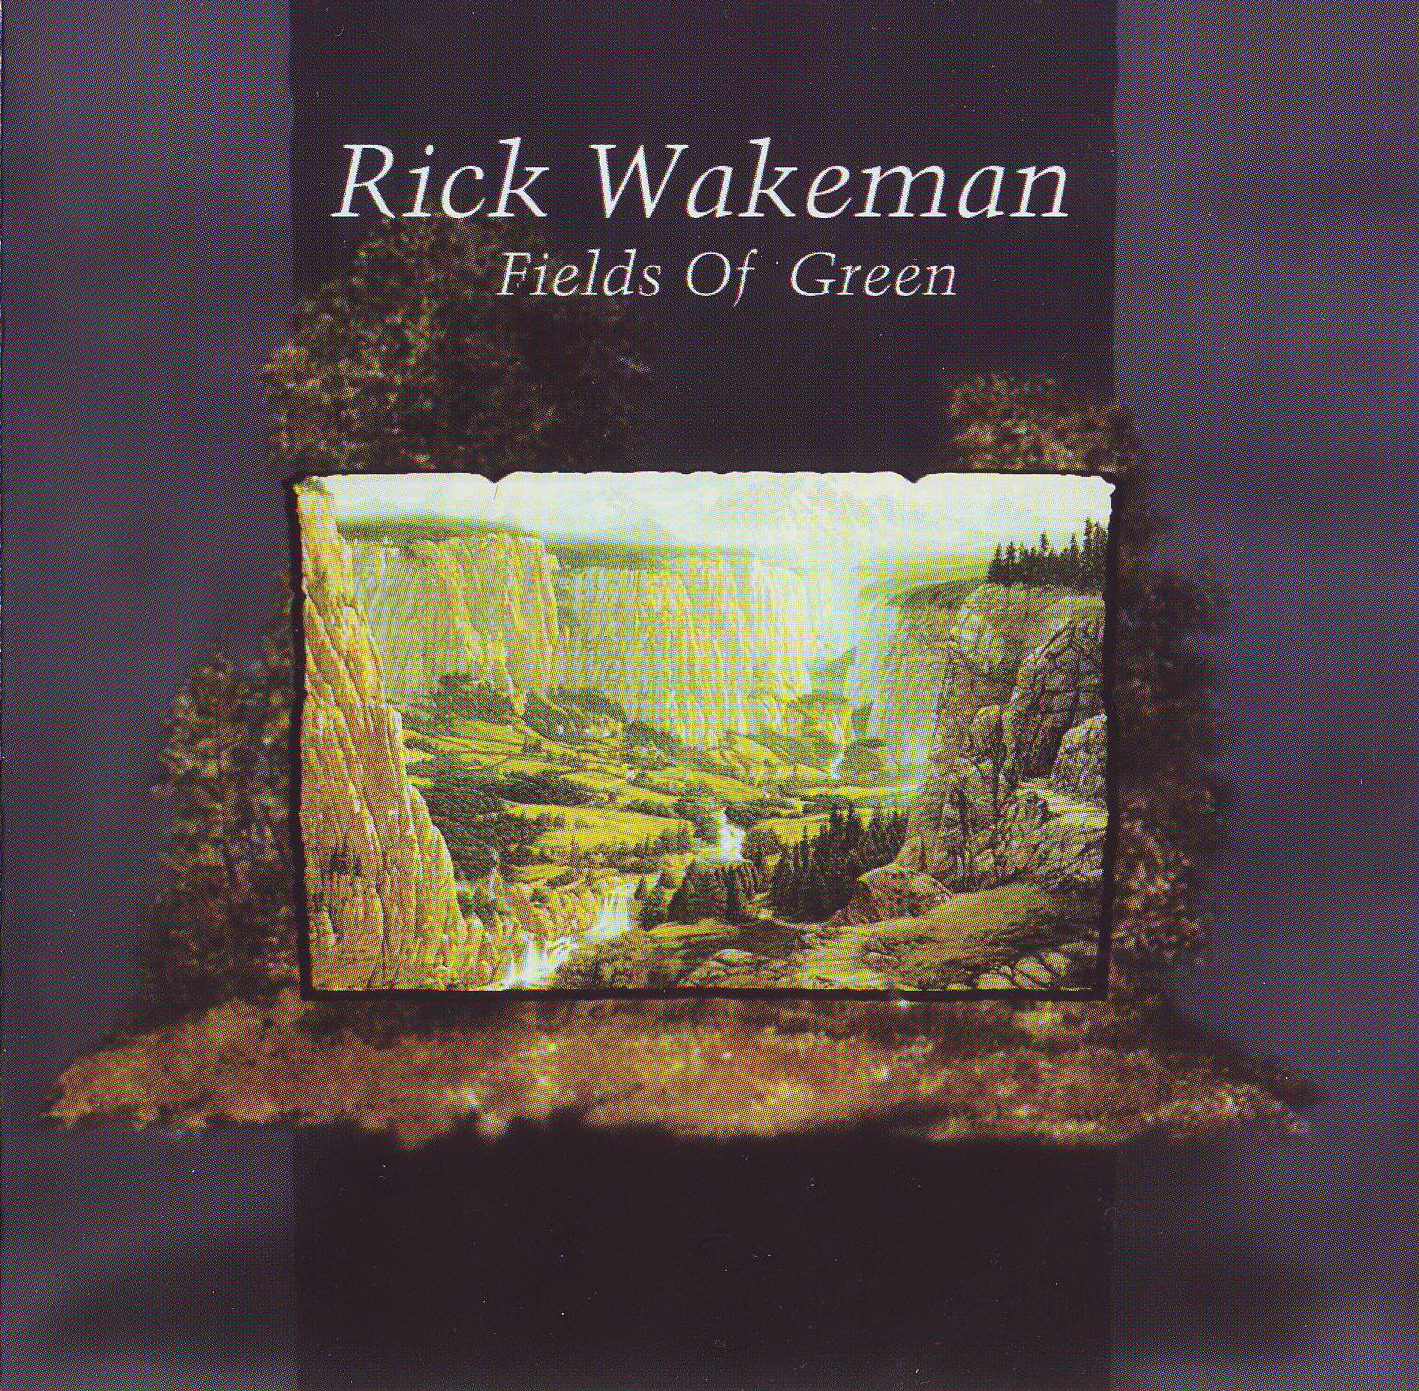 Rick Wakeman - Collection